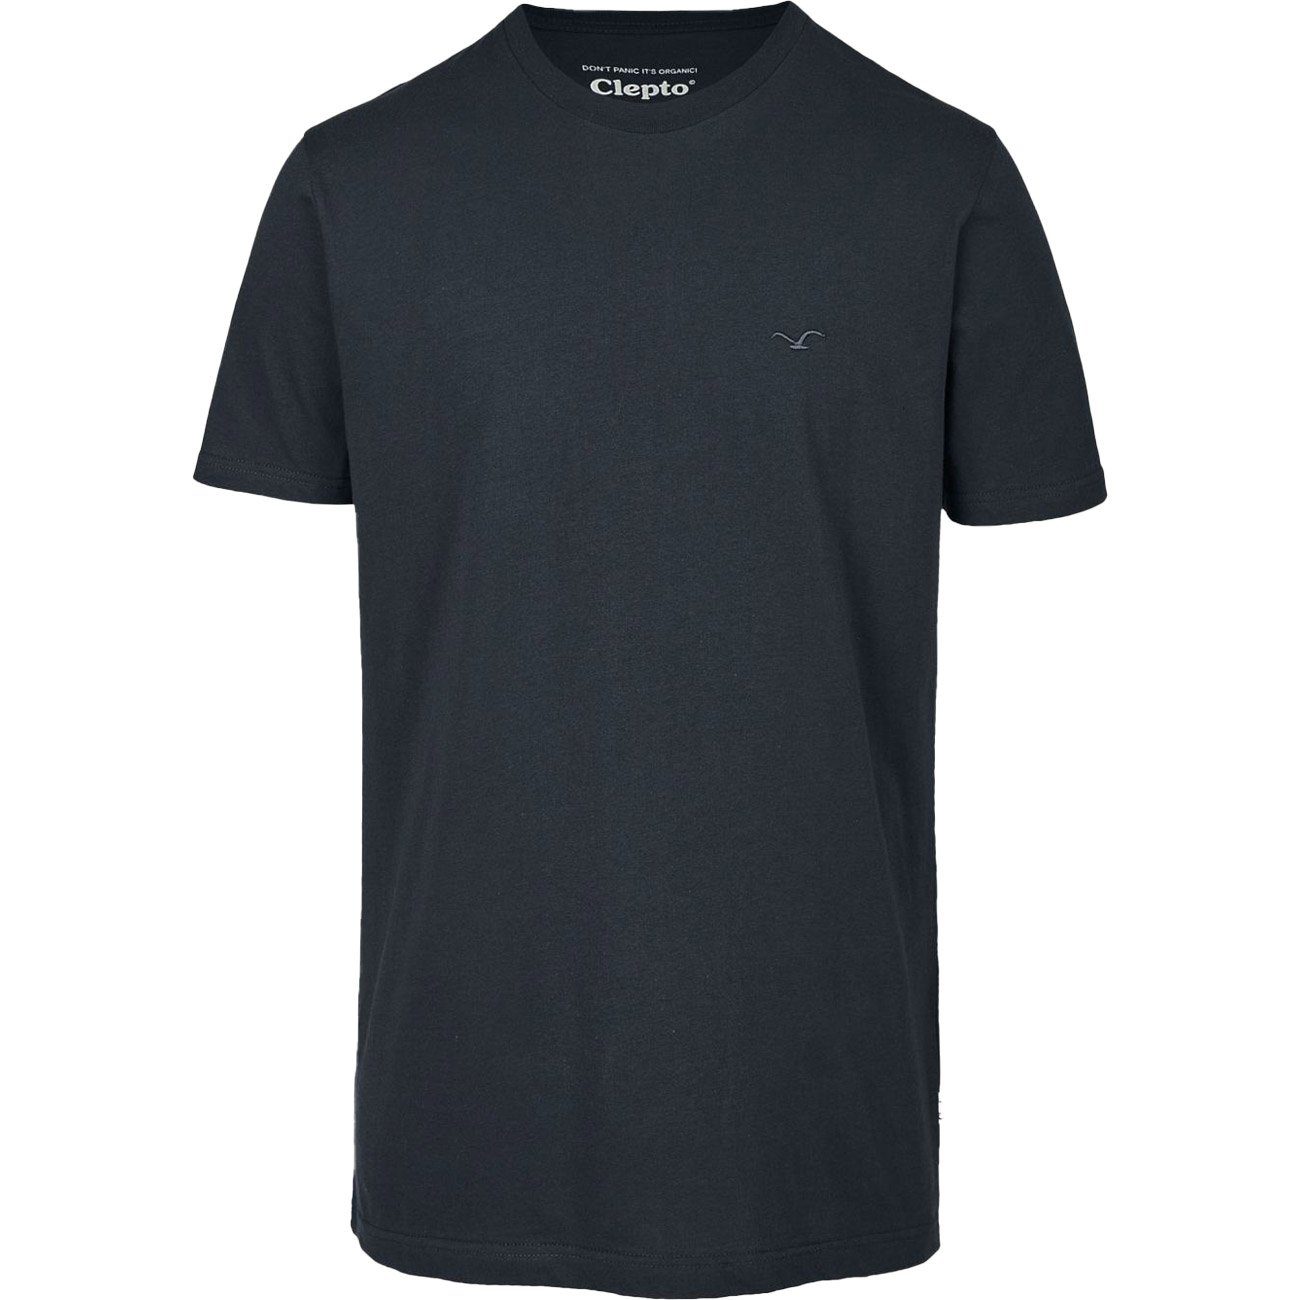 Cleptomanicx T-Shirt Ligull Regular blue mirage | T-Shirts